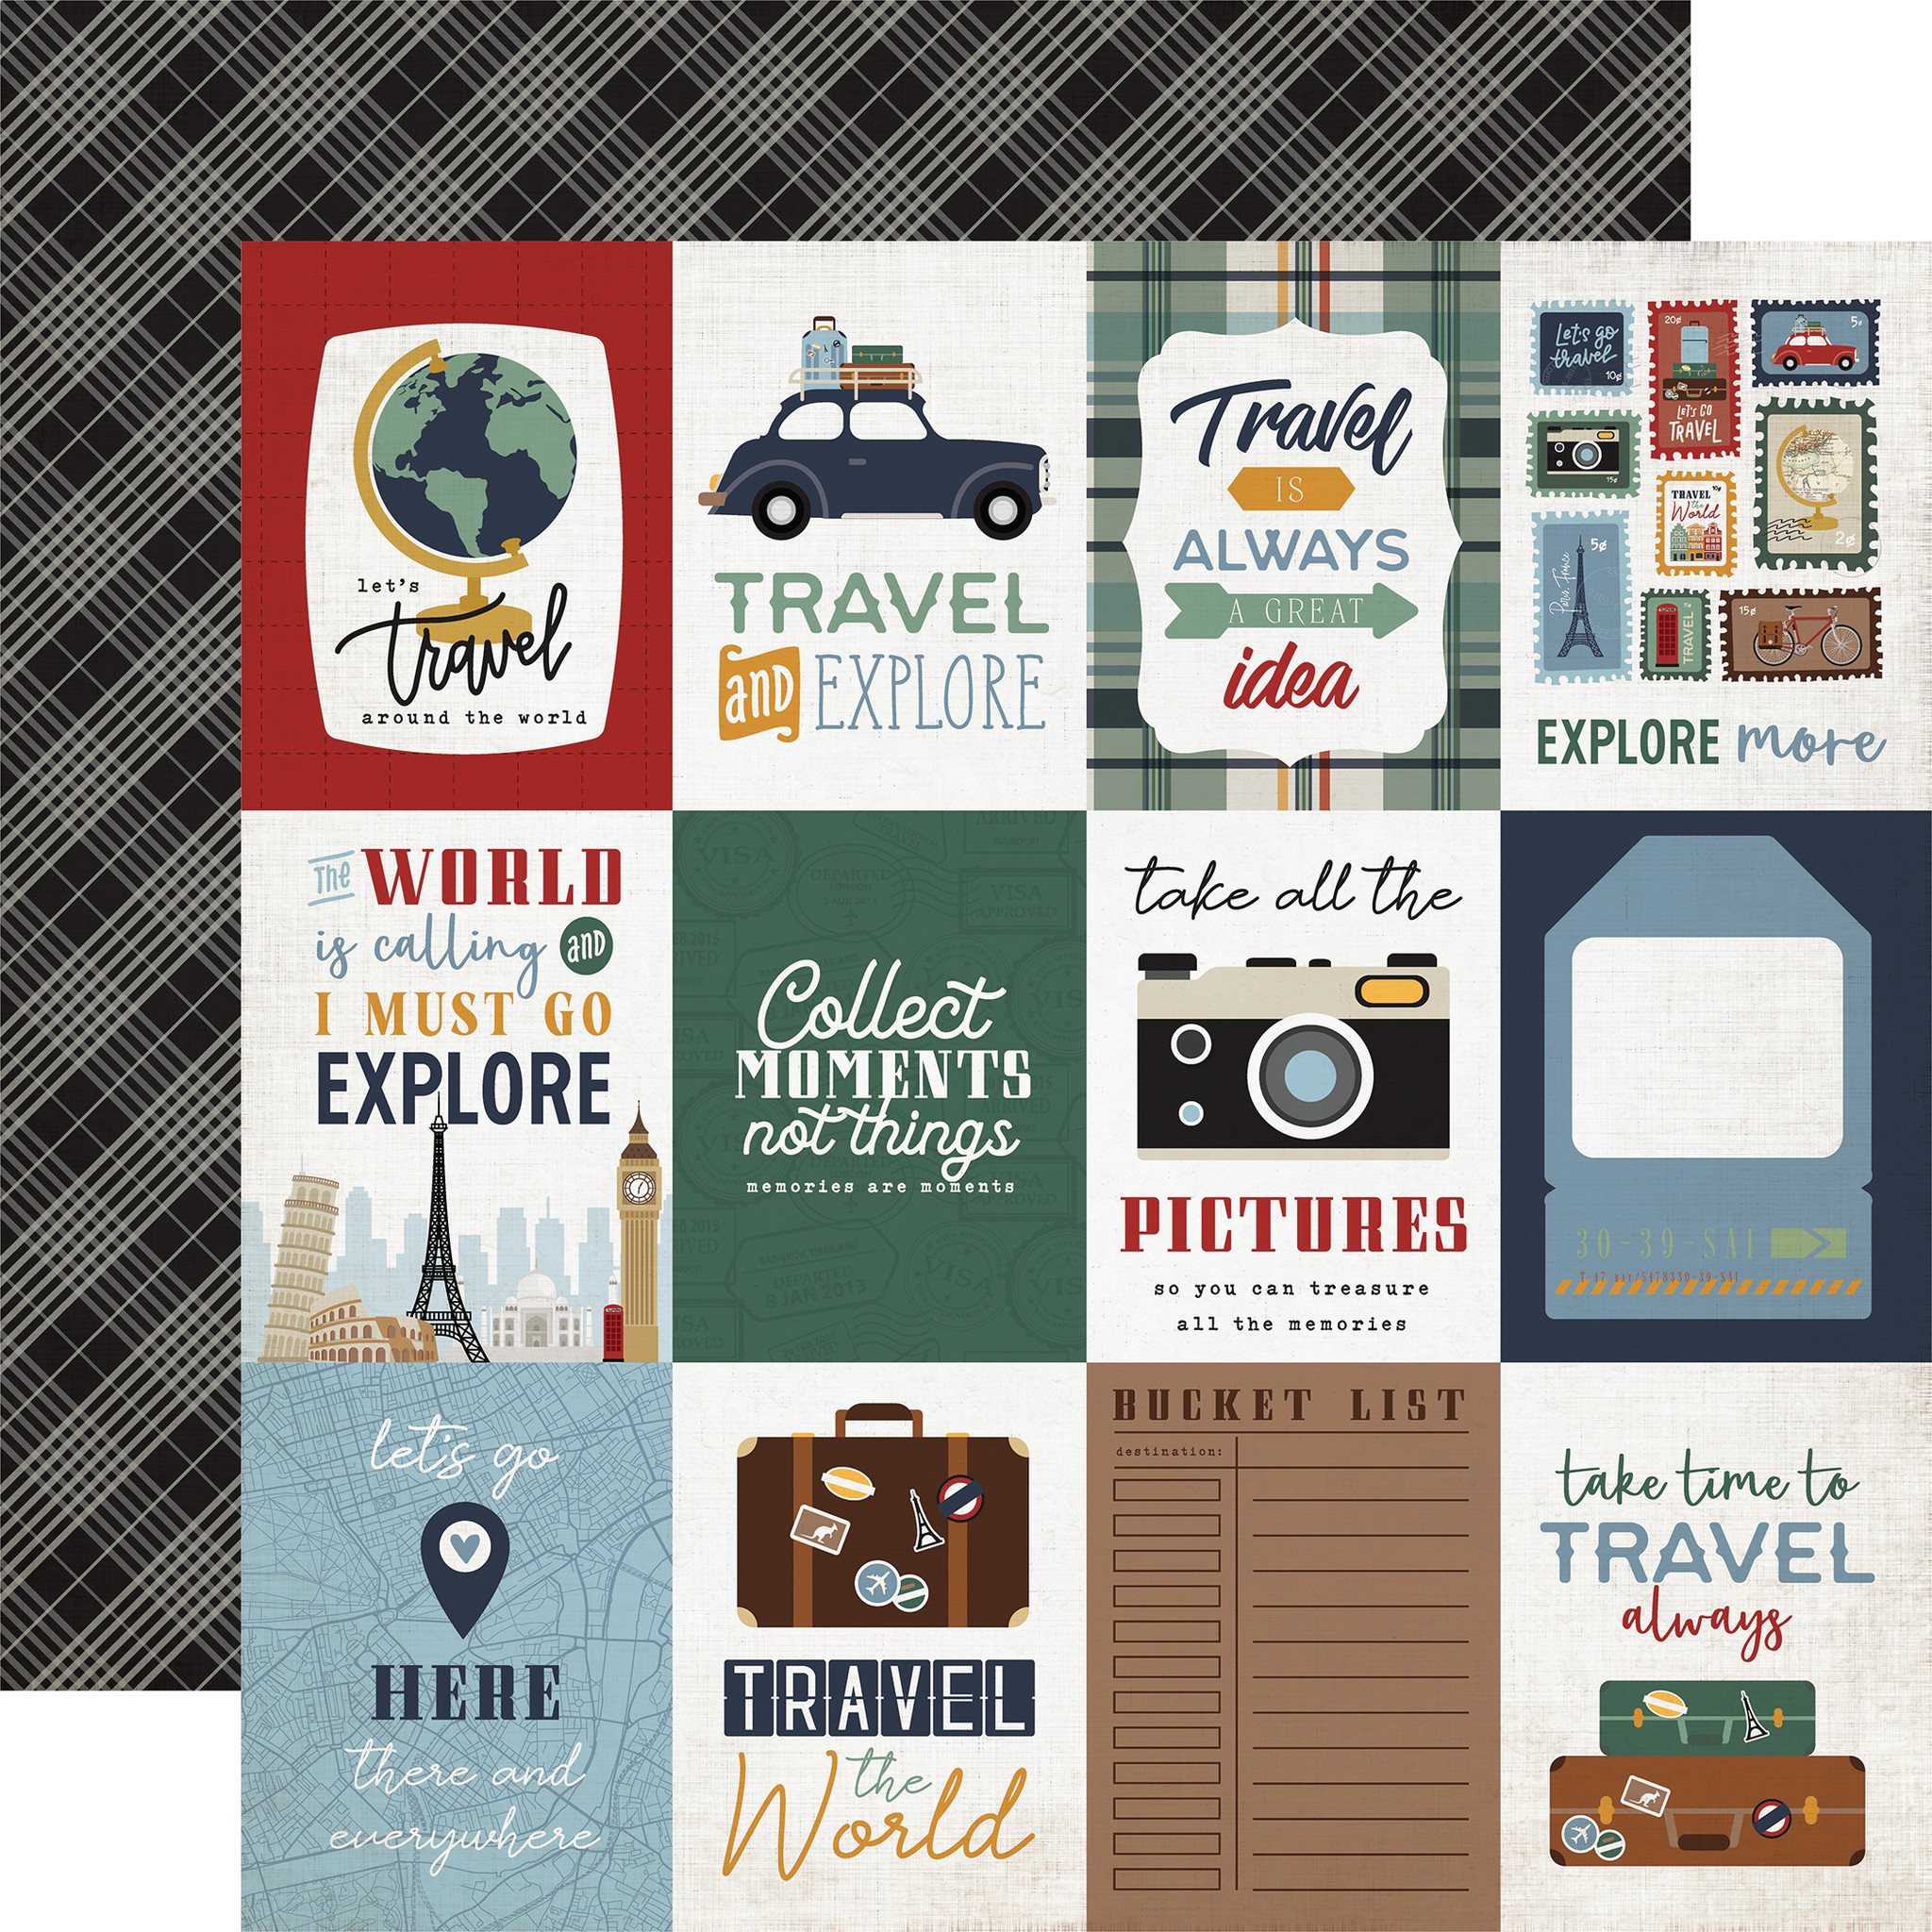 Let's Go Travel 6x6 Paper Pad